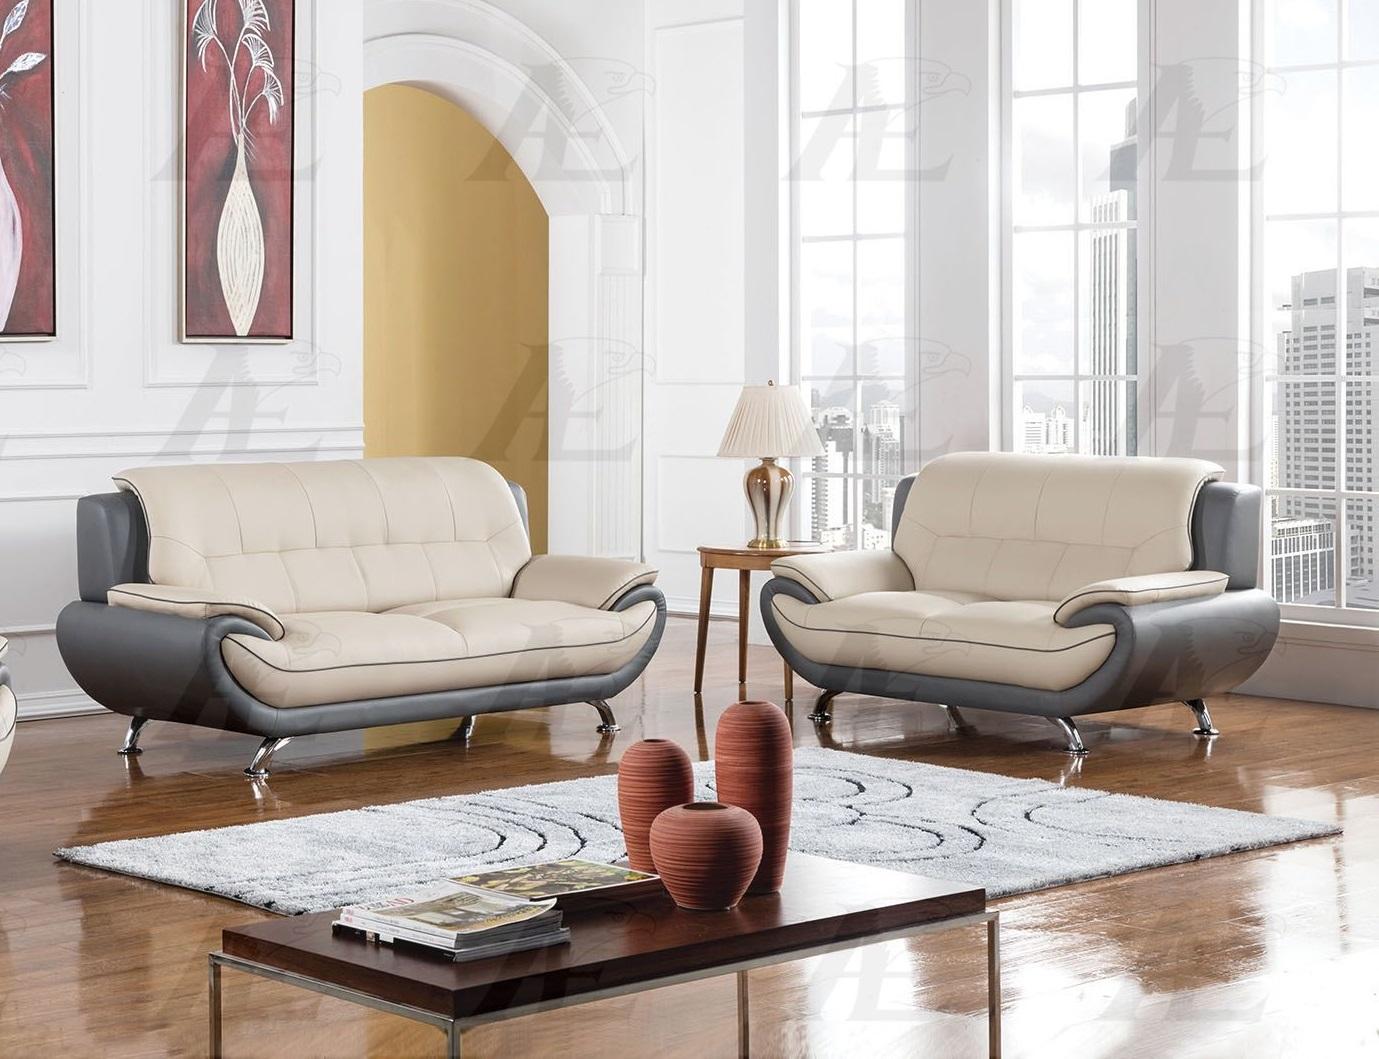 Contemporary, Modern Sofa Set AE208-LG.DG-2PC AE208-LG.DG-2PC in Light Gray, Gray Faux Leather